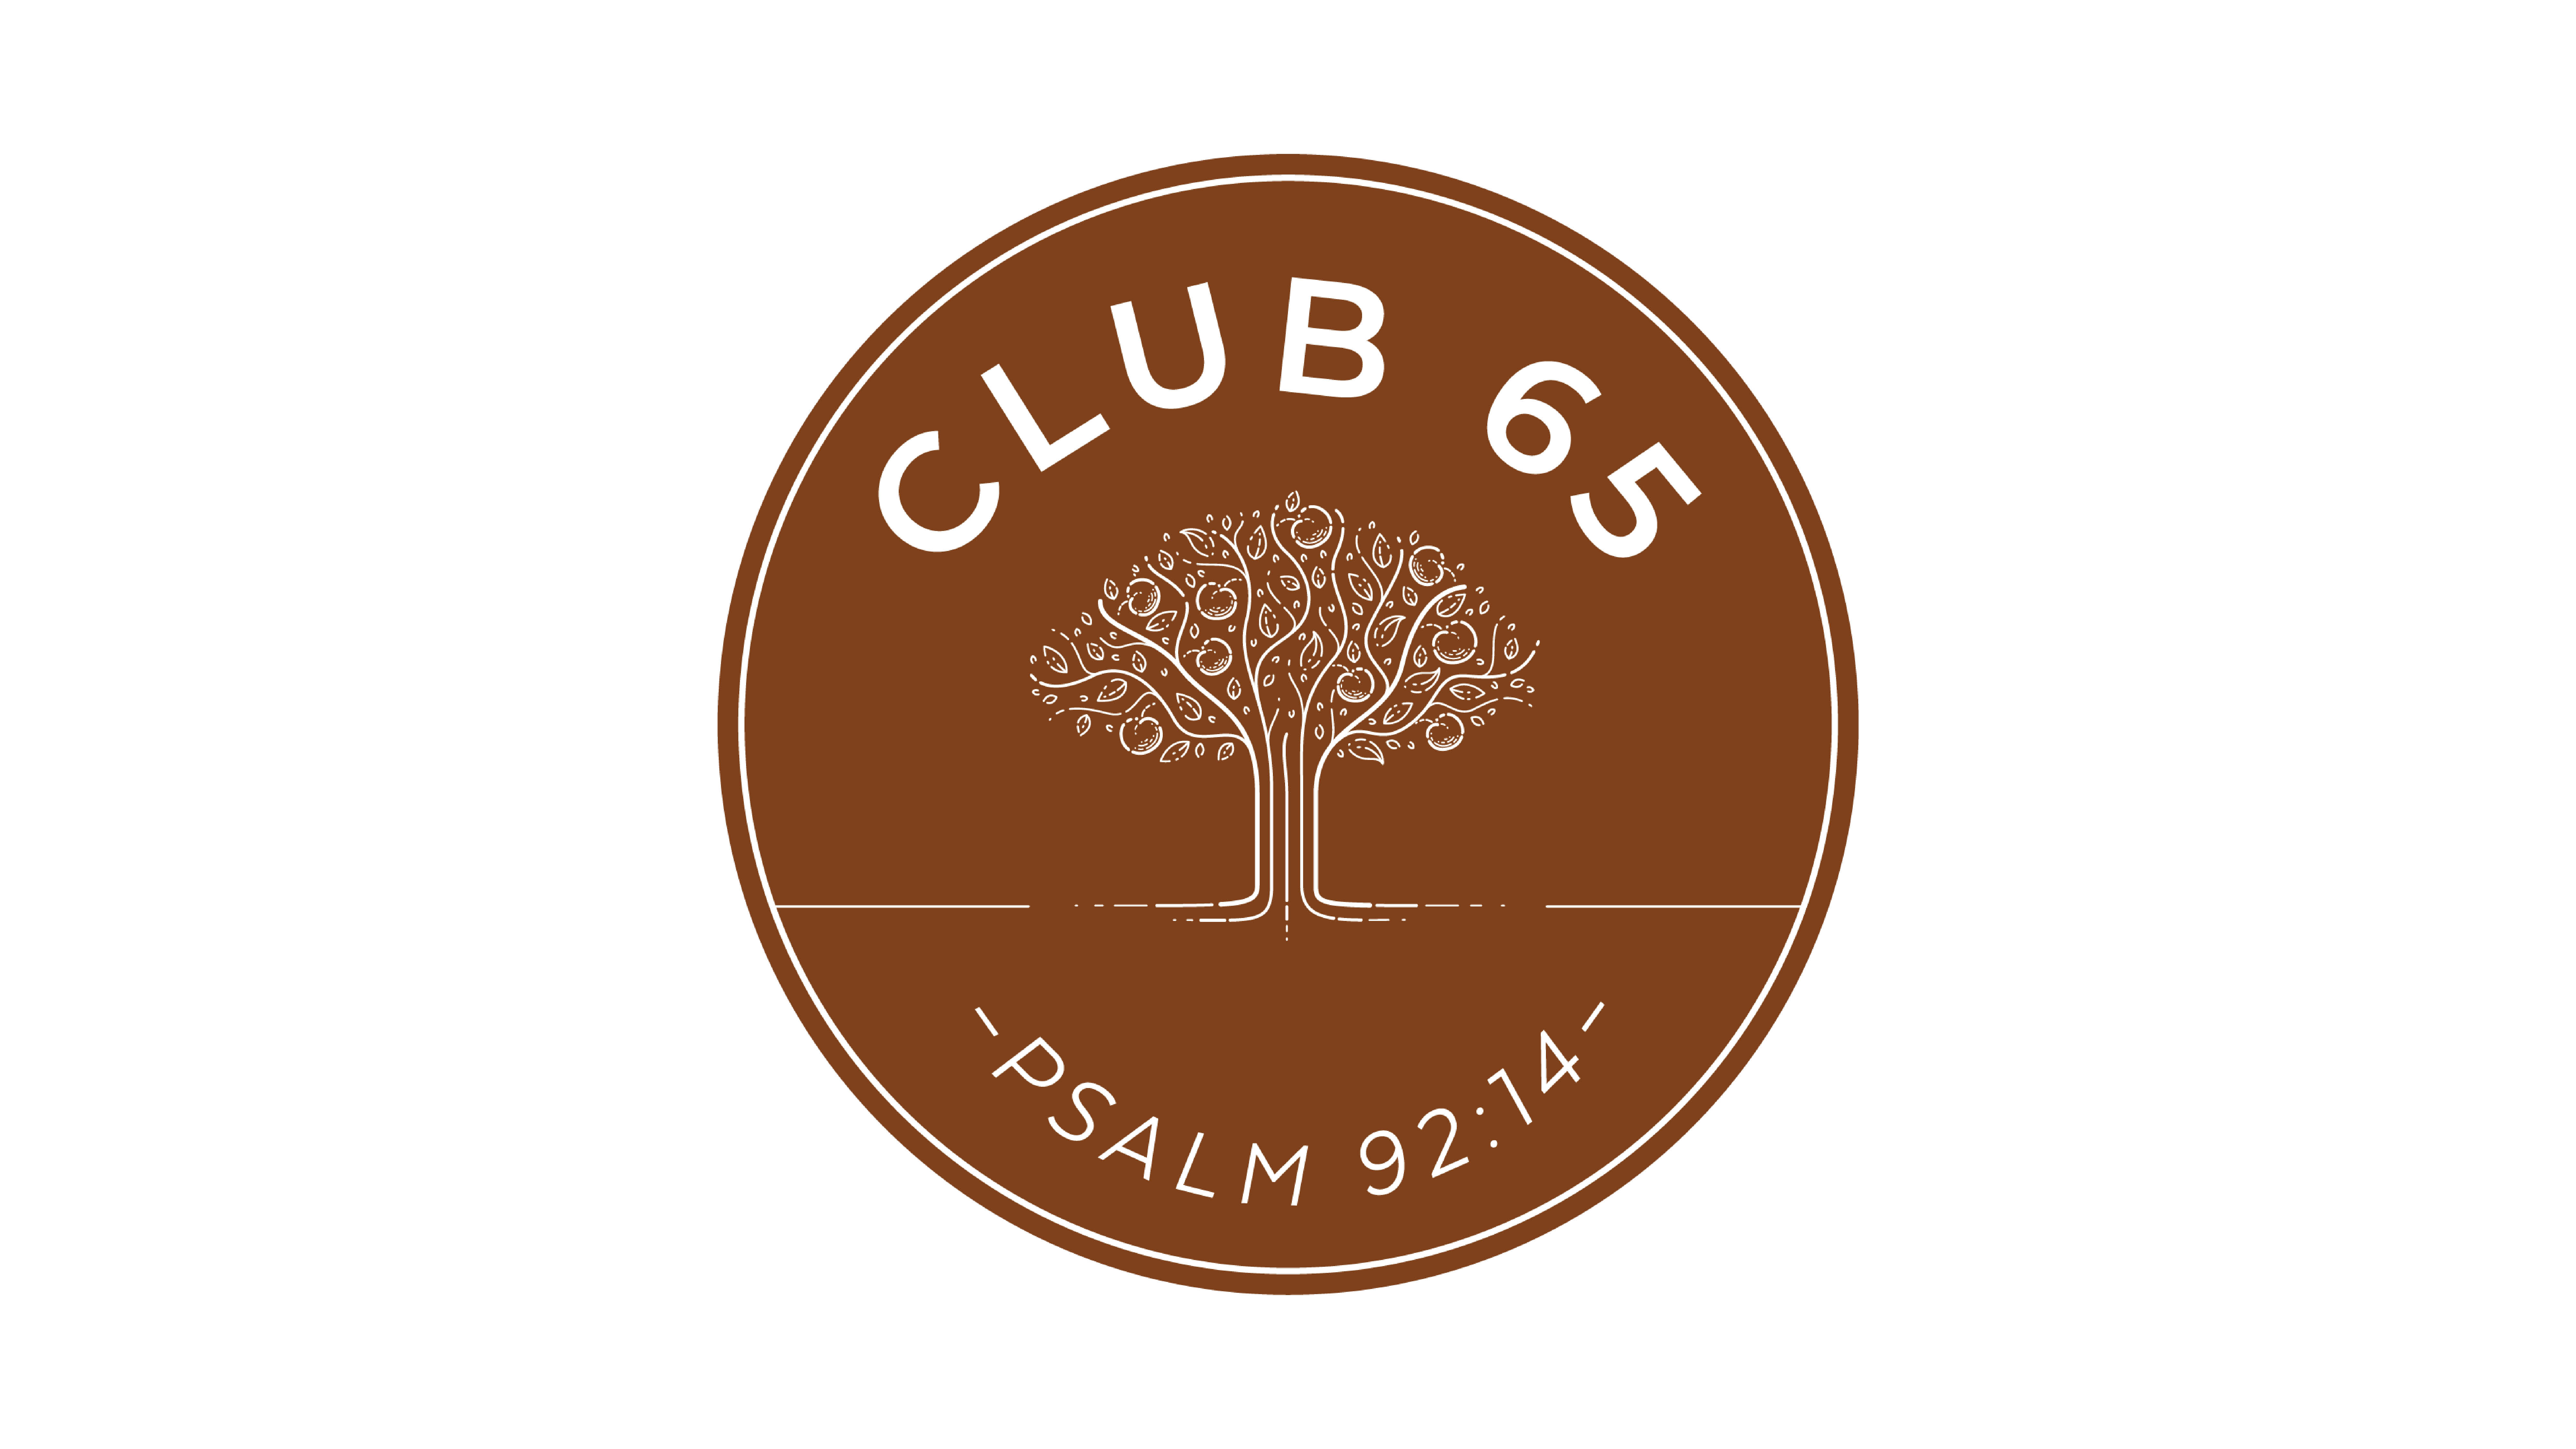 Club 65 event